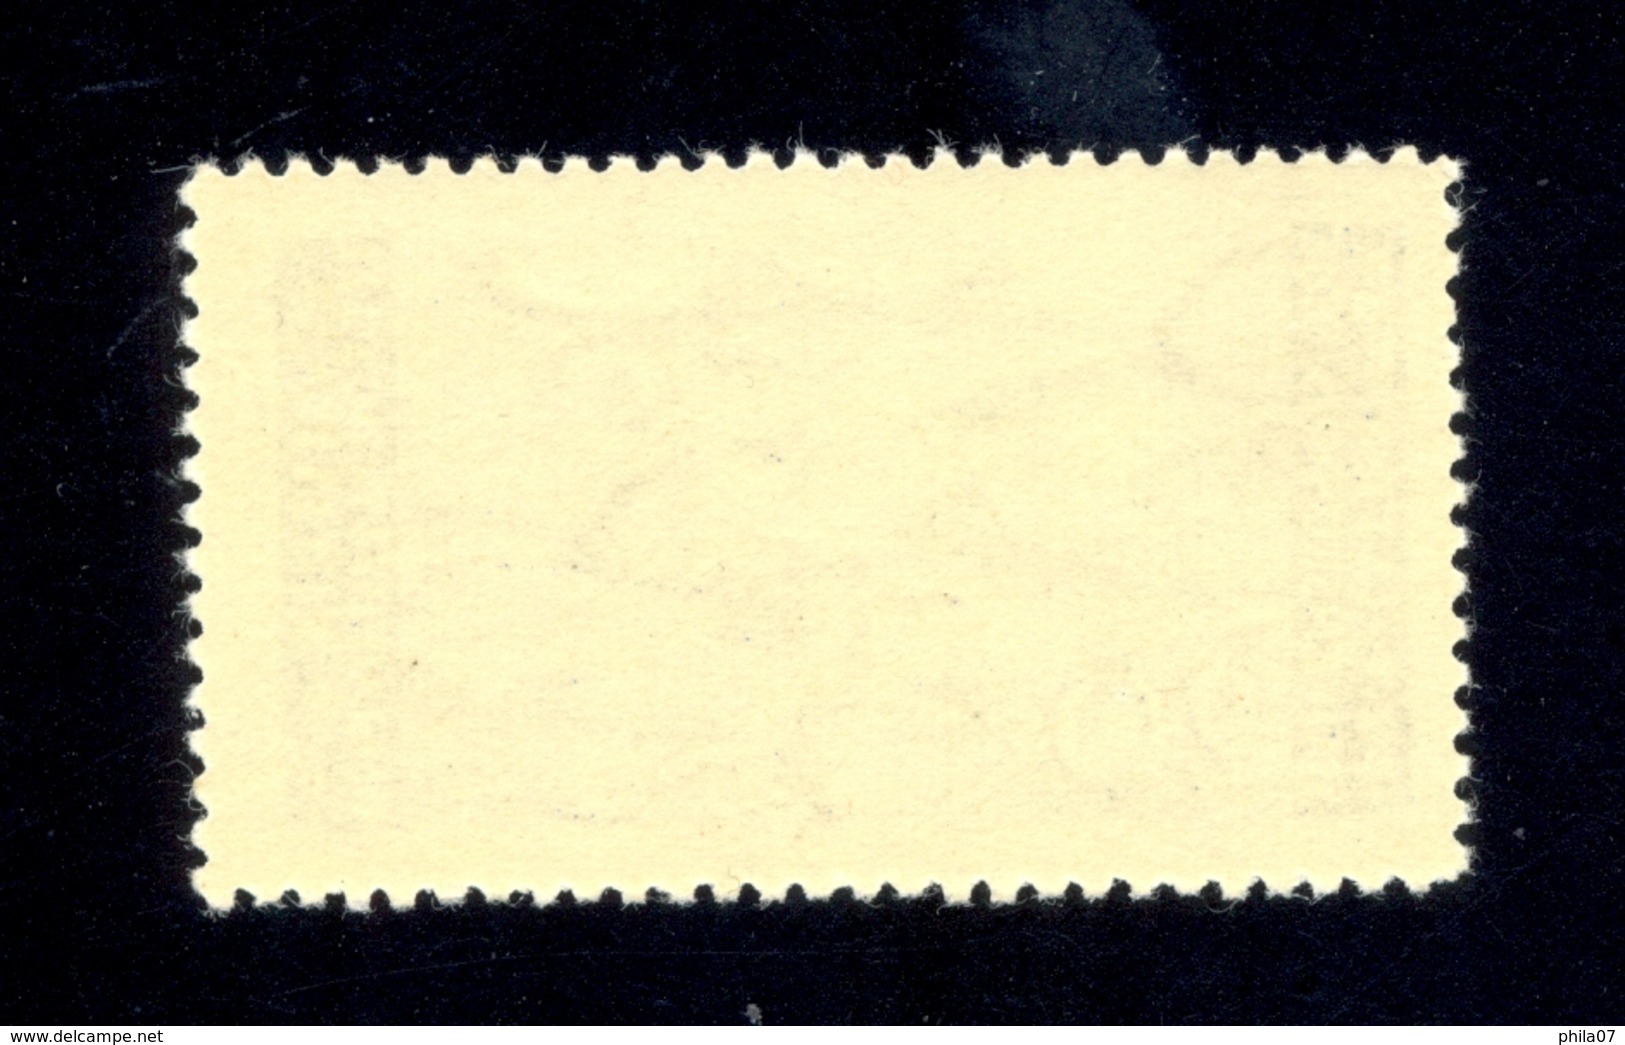 Italy, Yugoslavia - Error Of Print, Novakovic B30-65.1, MNH - Yugoslavian Occ.: Slovenian Shore